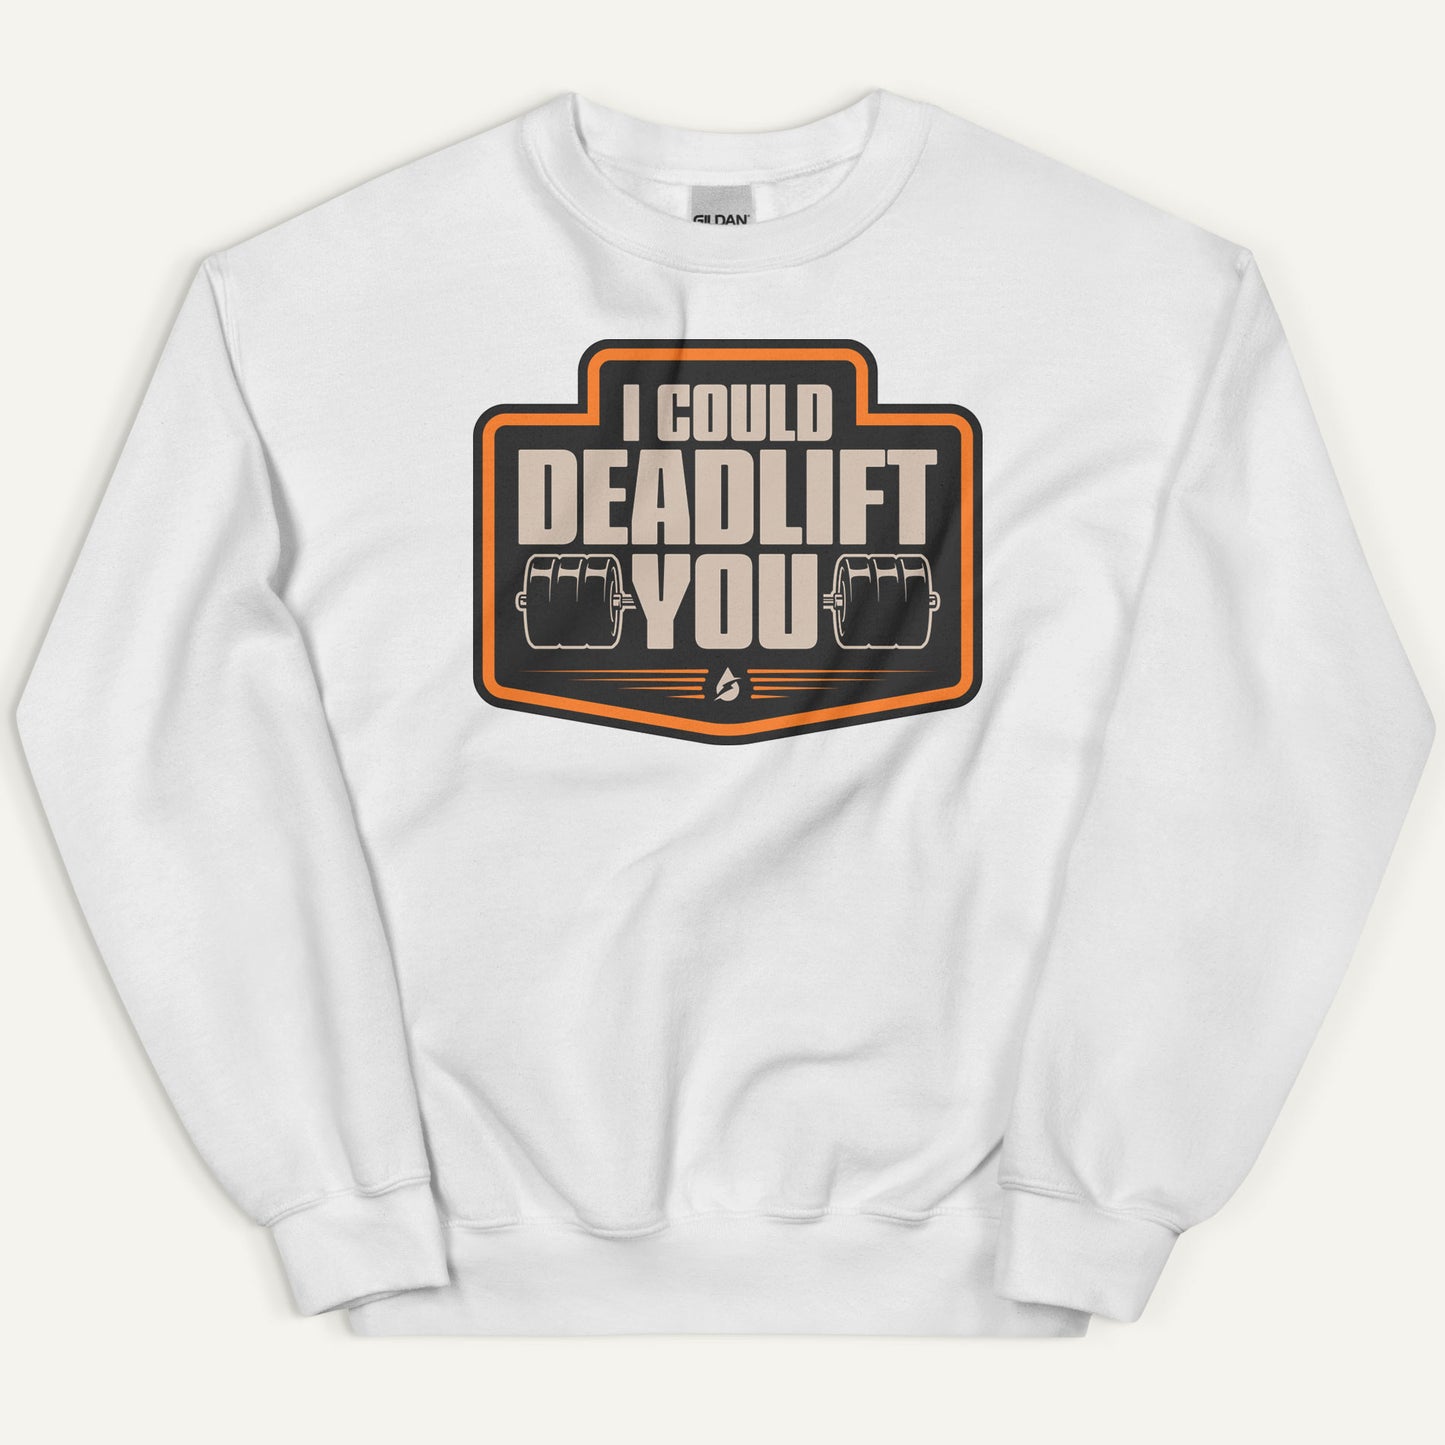 I Could Deadlift You Sweatshirt